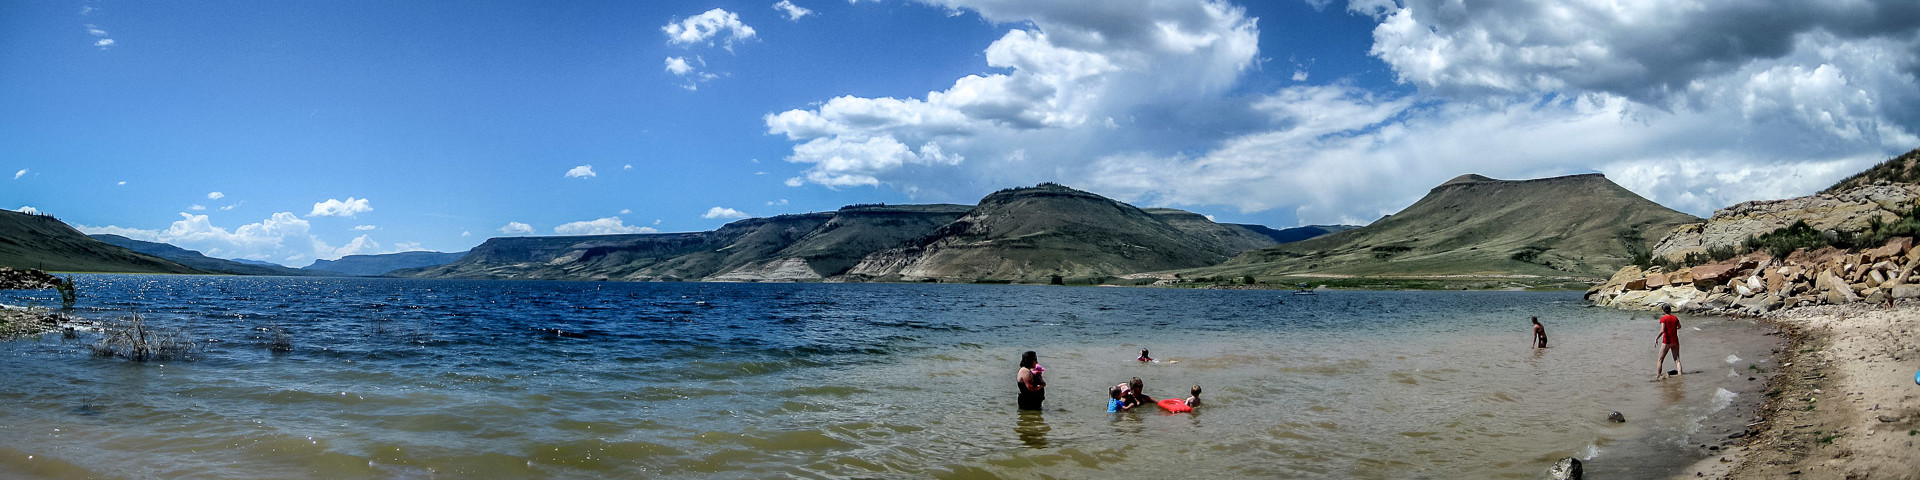 Curecanti NRA: Blue Mesa Lake